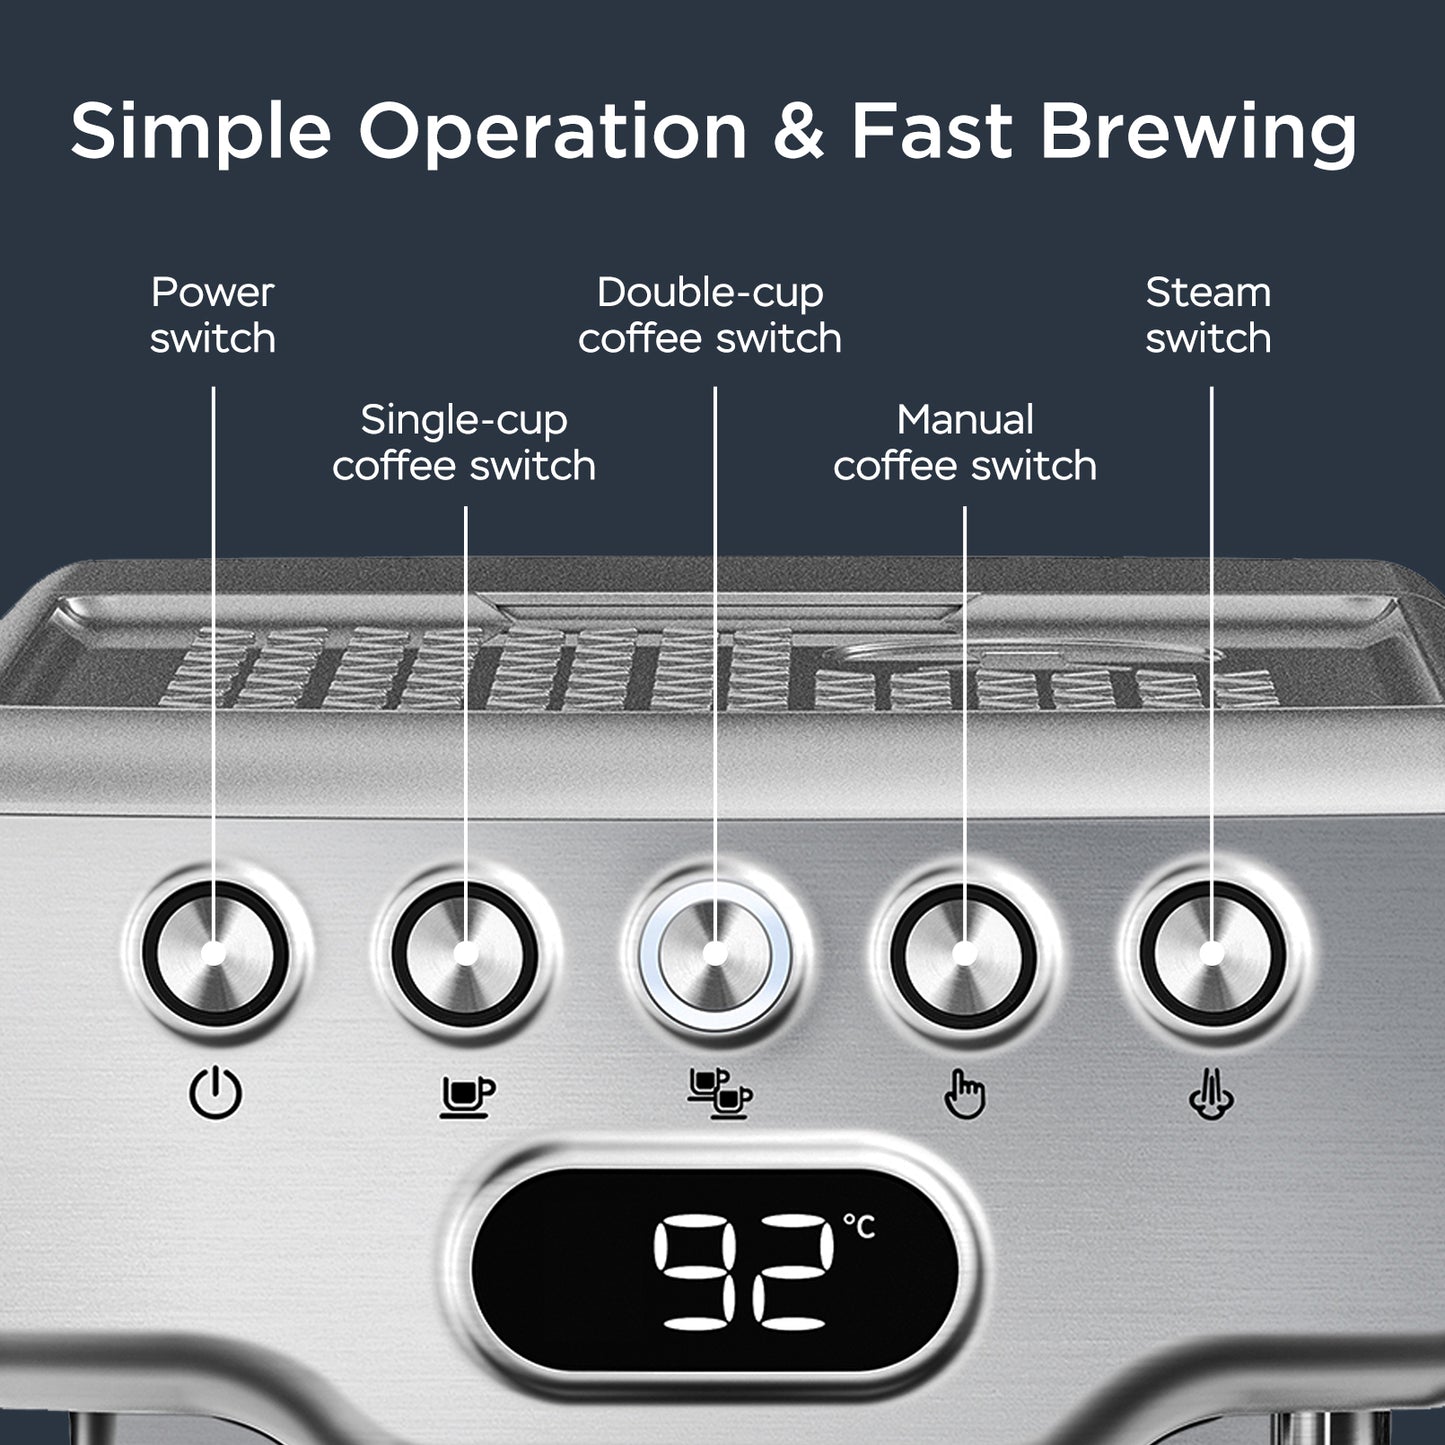 20 Bar Espresso Machine With Milk Frothier For Latte, Cappuccino